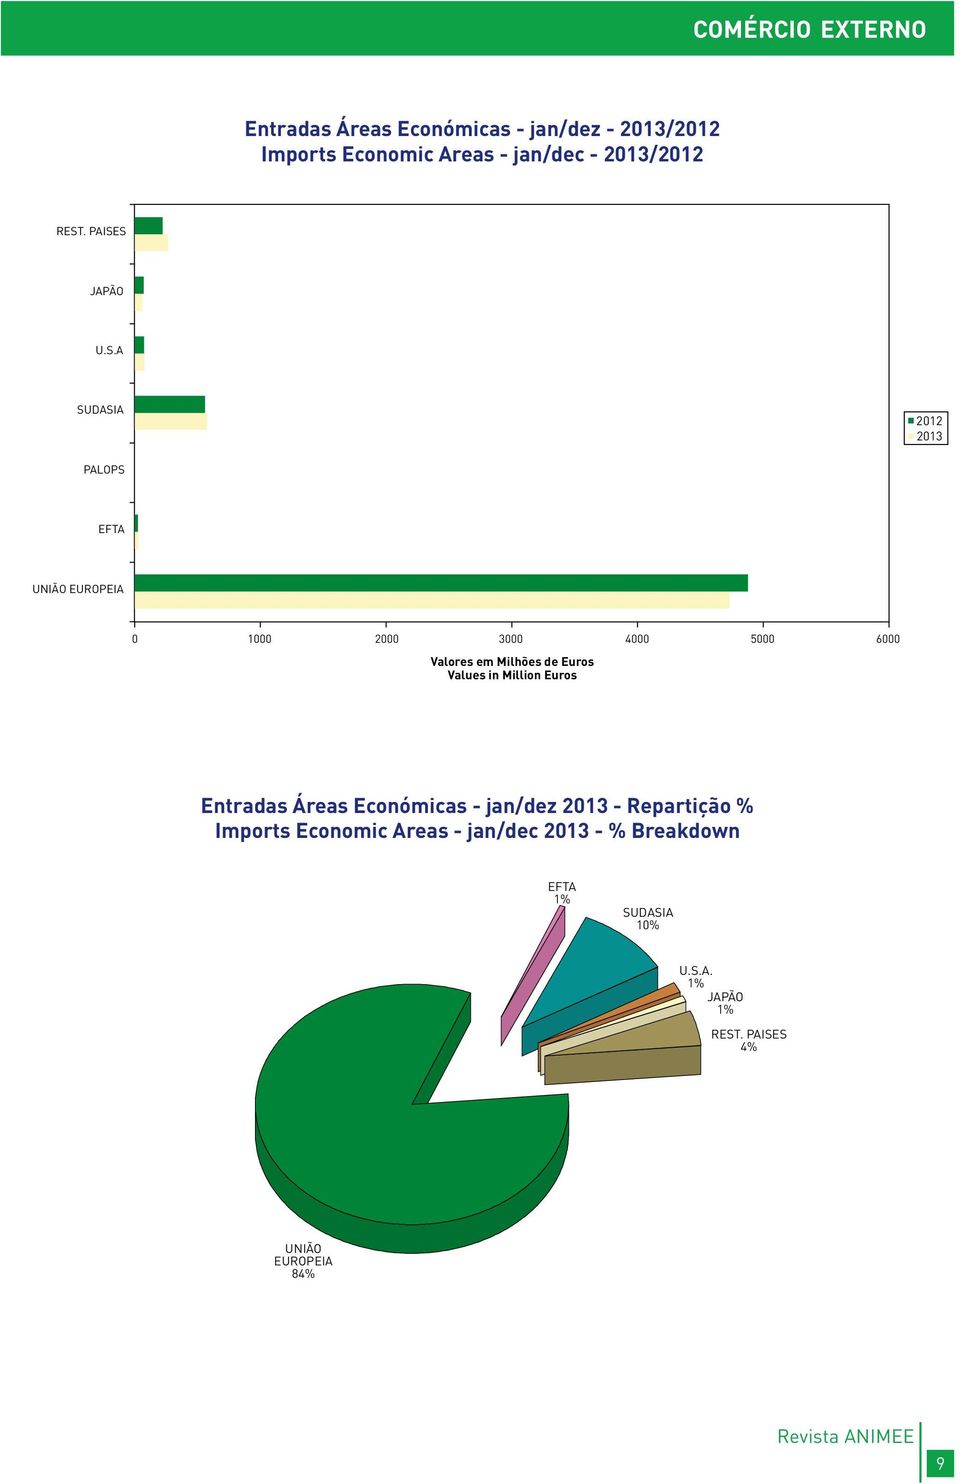 de Euros Values in Million Euros Entradas Áreas Económicas - jan/dez 2013 - Repartição % Imports Economic Areas -